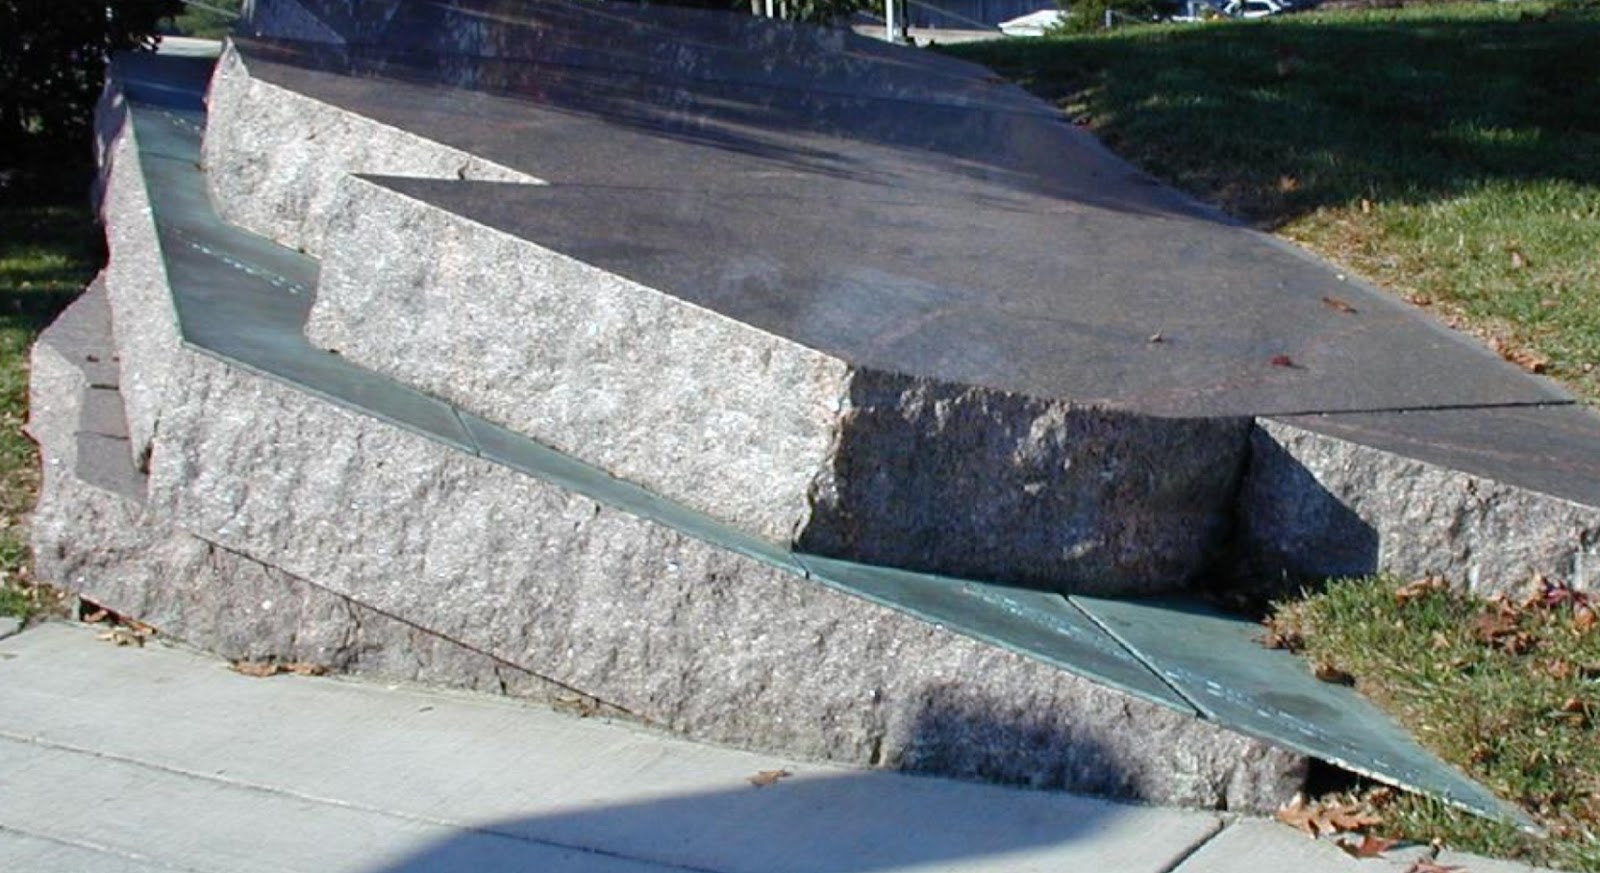 Kryptos granite slabs include Morse code